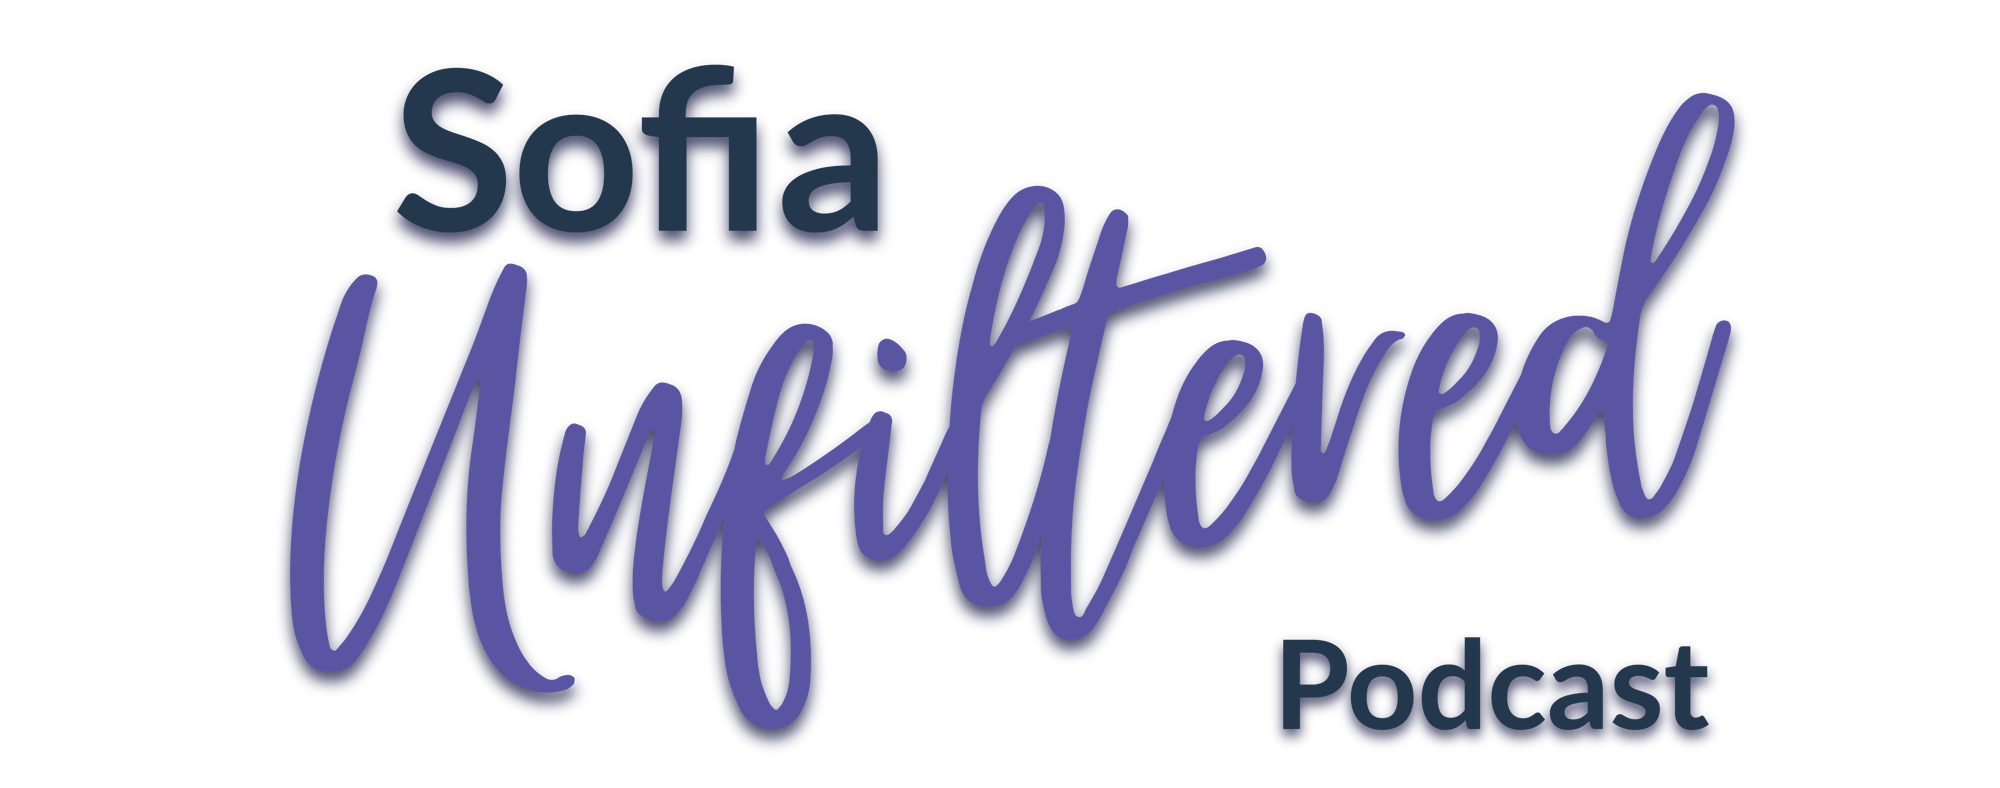 Sofia Unfiltered Logos-07-1